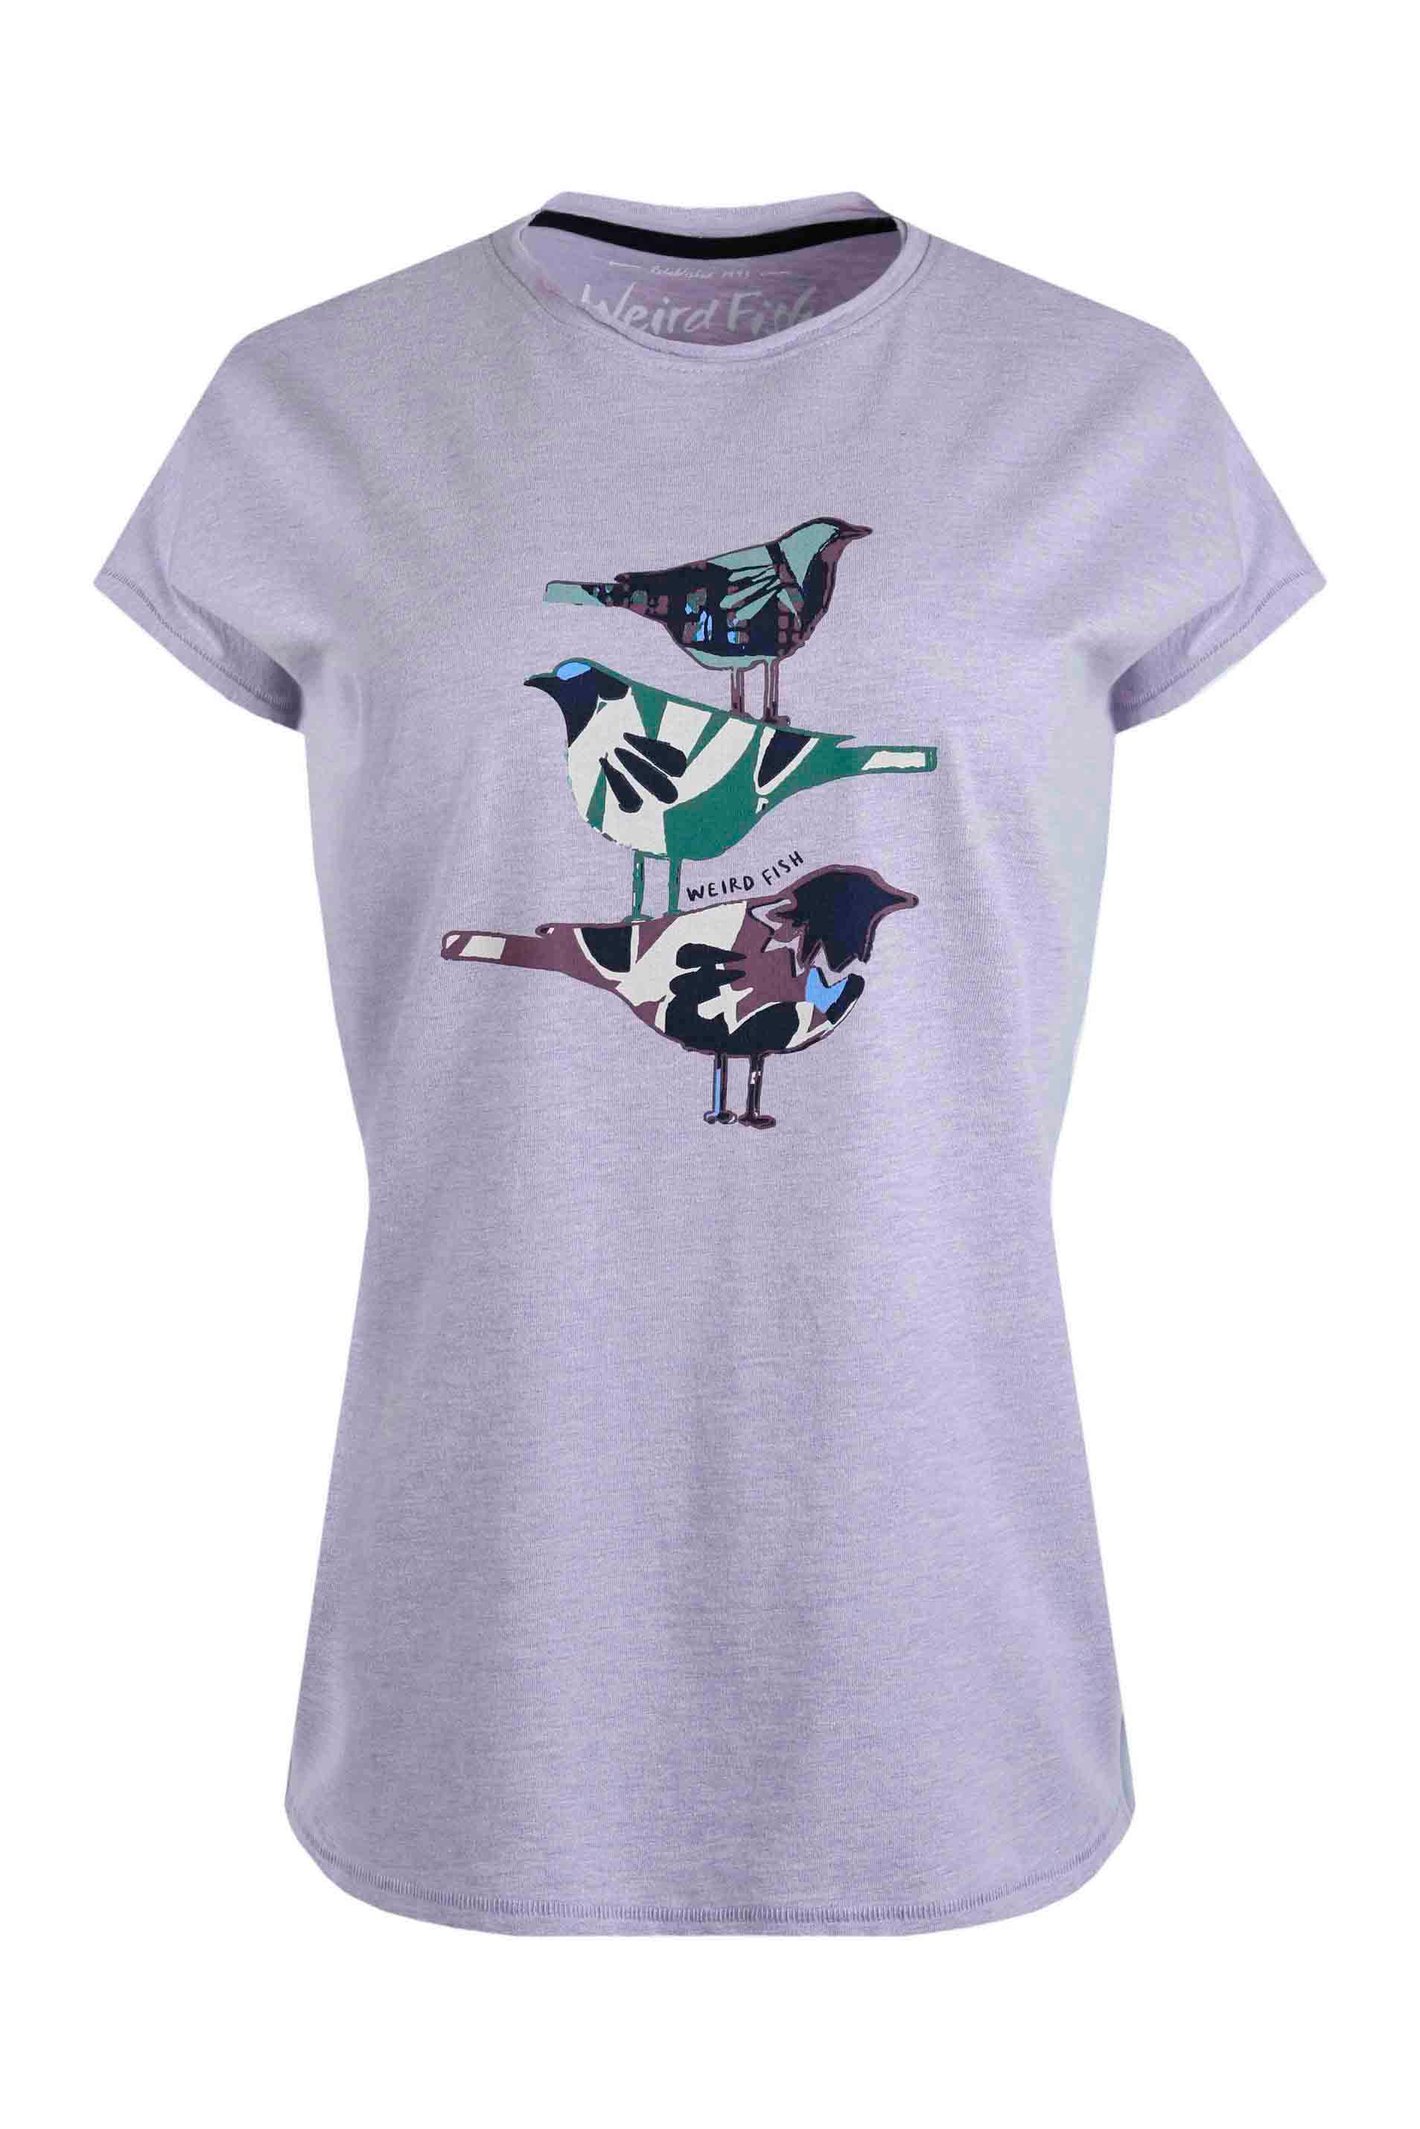 Weird Fish Fugol Organic Graphic T-Shirt Lilac Hint Size 14